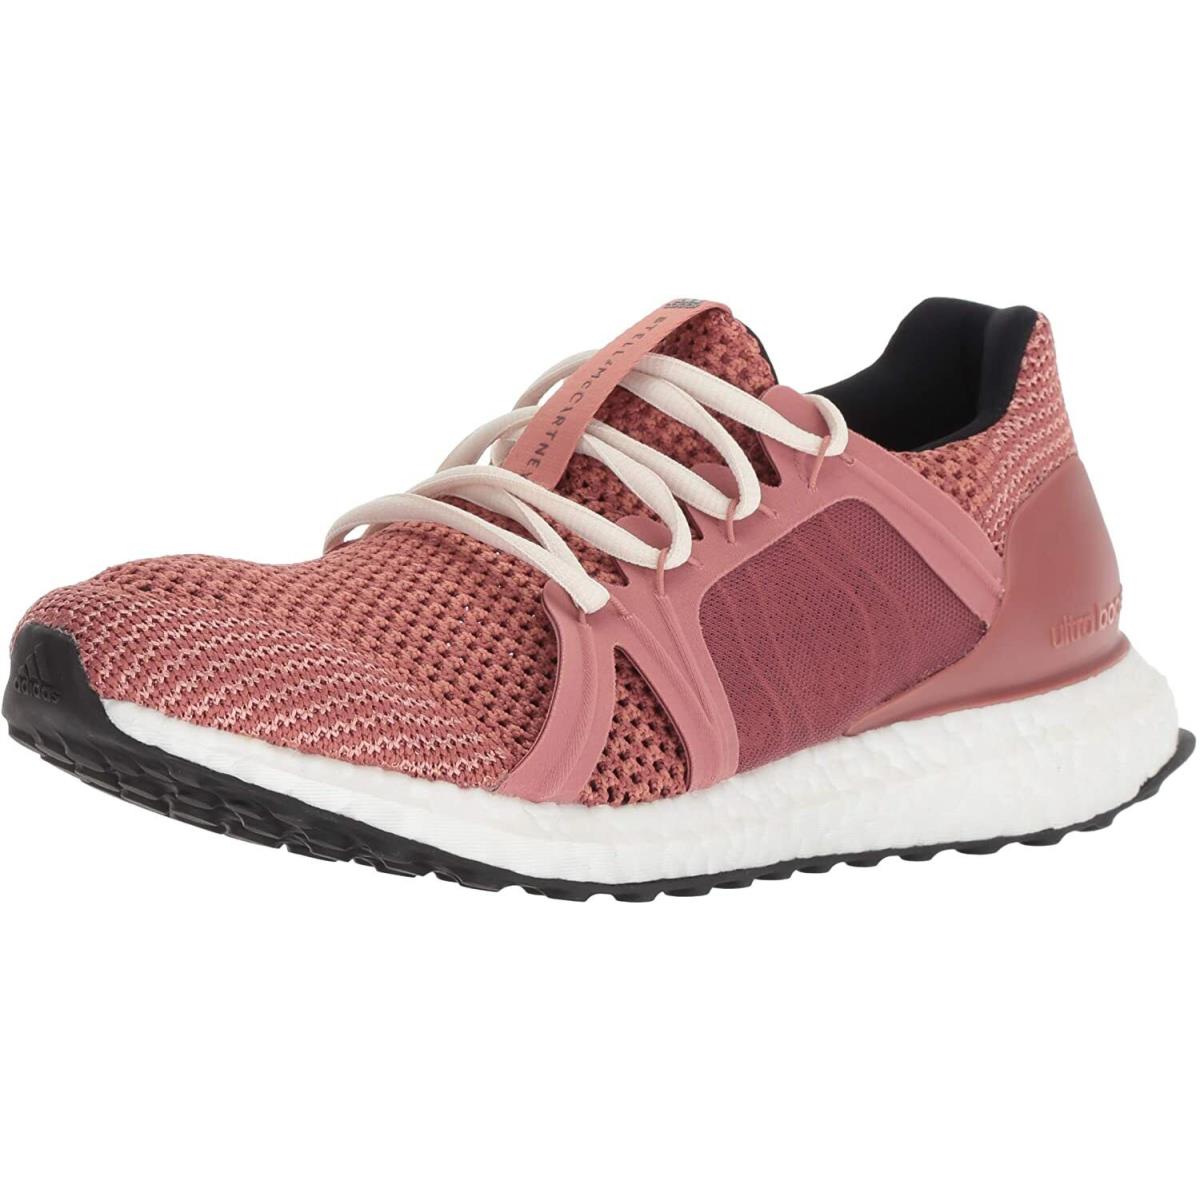 Adidas Originals Women`s Ultraboost Running Shoes AC7565 Size 10.5 US - Raw Pink/Coffee Rose/Black